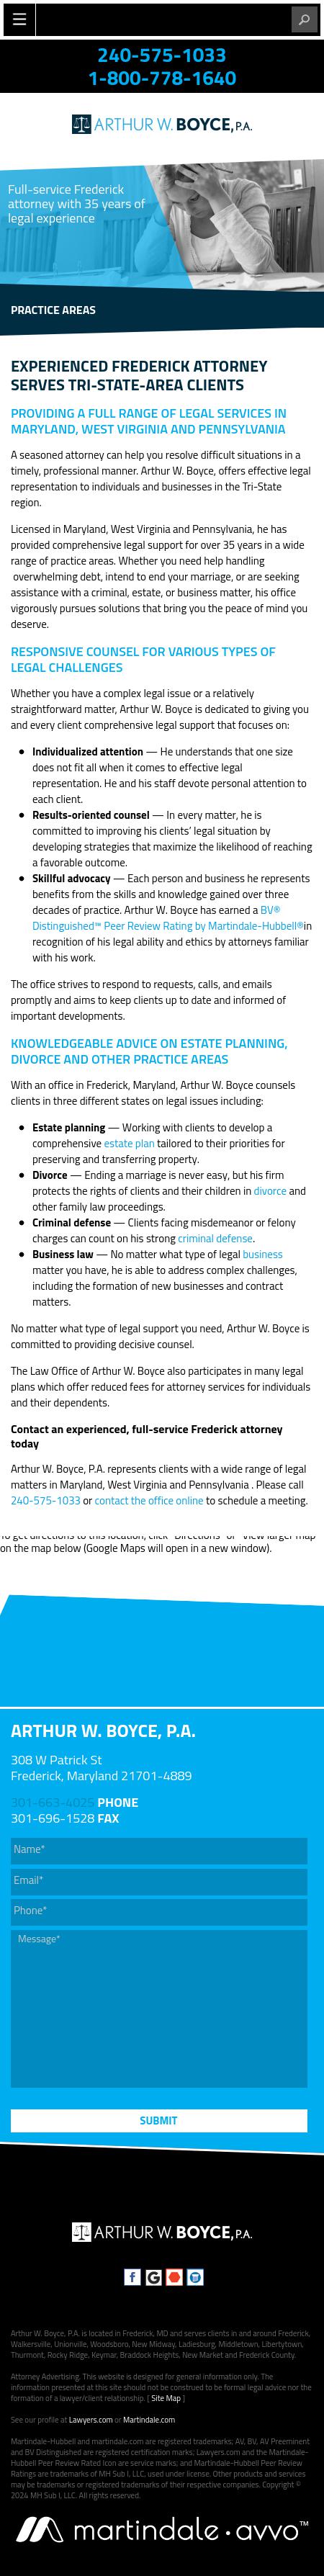 The Law Office of Arthur W. Boyce - Frederick MD Lawyers